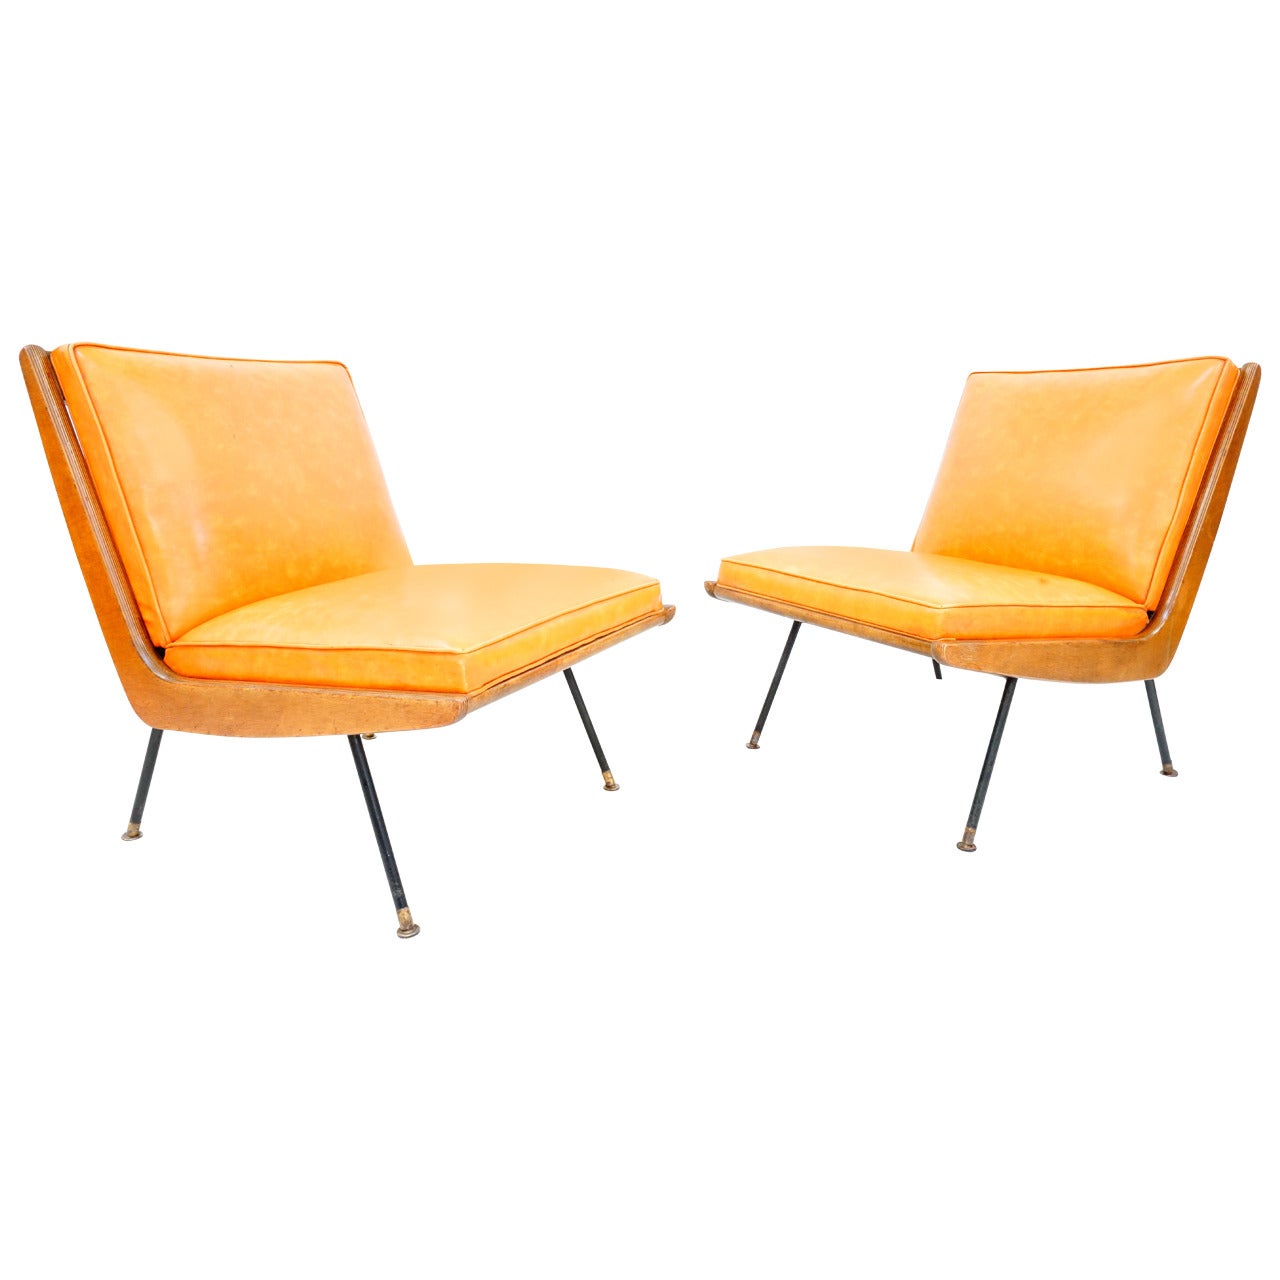 Rare Pair of California Modern Boomerang Chairs with Iron Legs